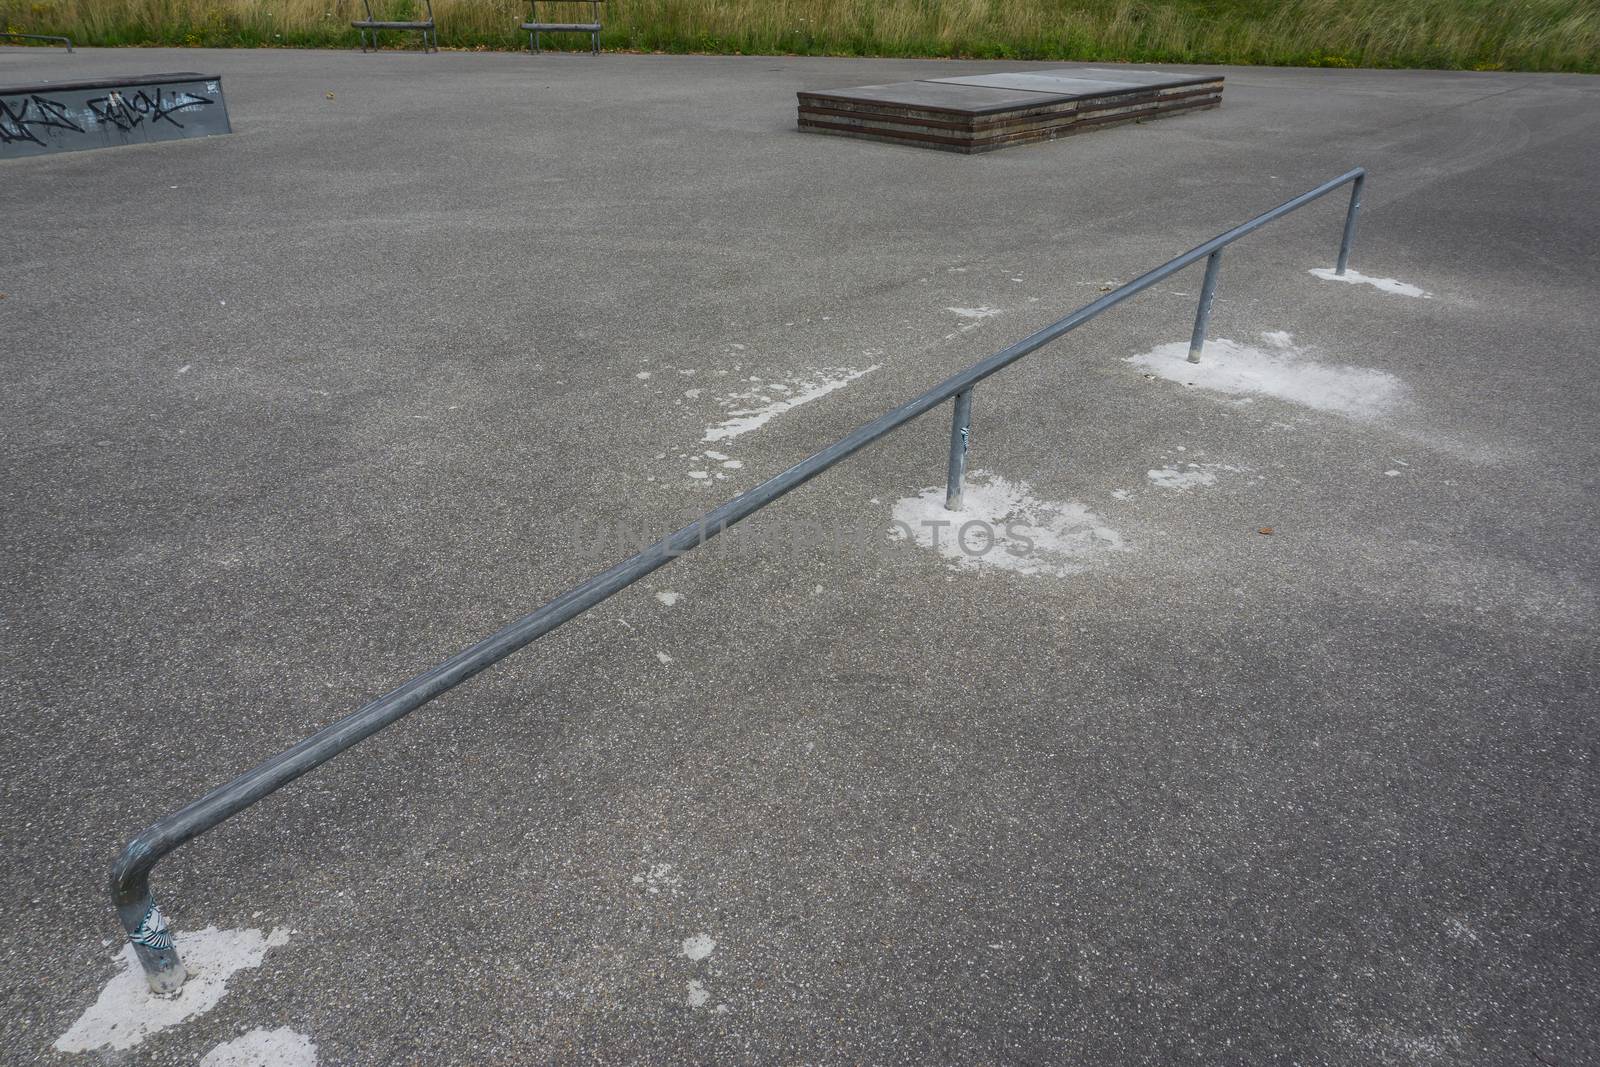 skateboard grind railing at the skate park upper view by charlottebleijenberg